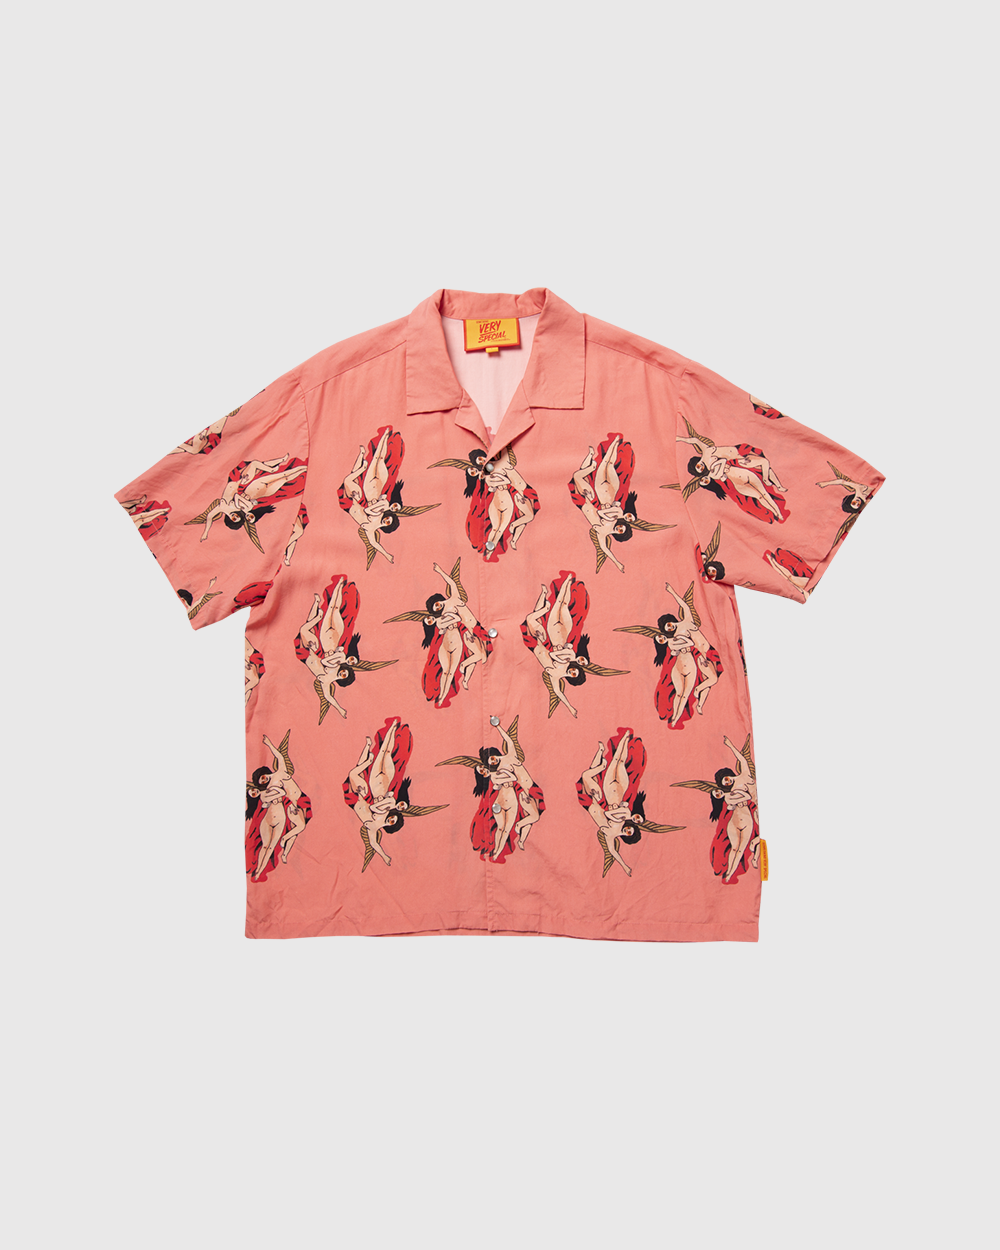 Dusty Pink "Yakob Angels" Resort Shirt